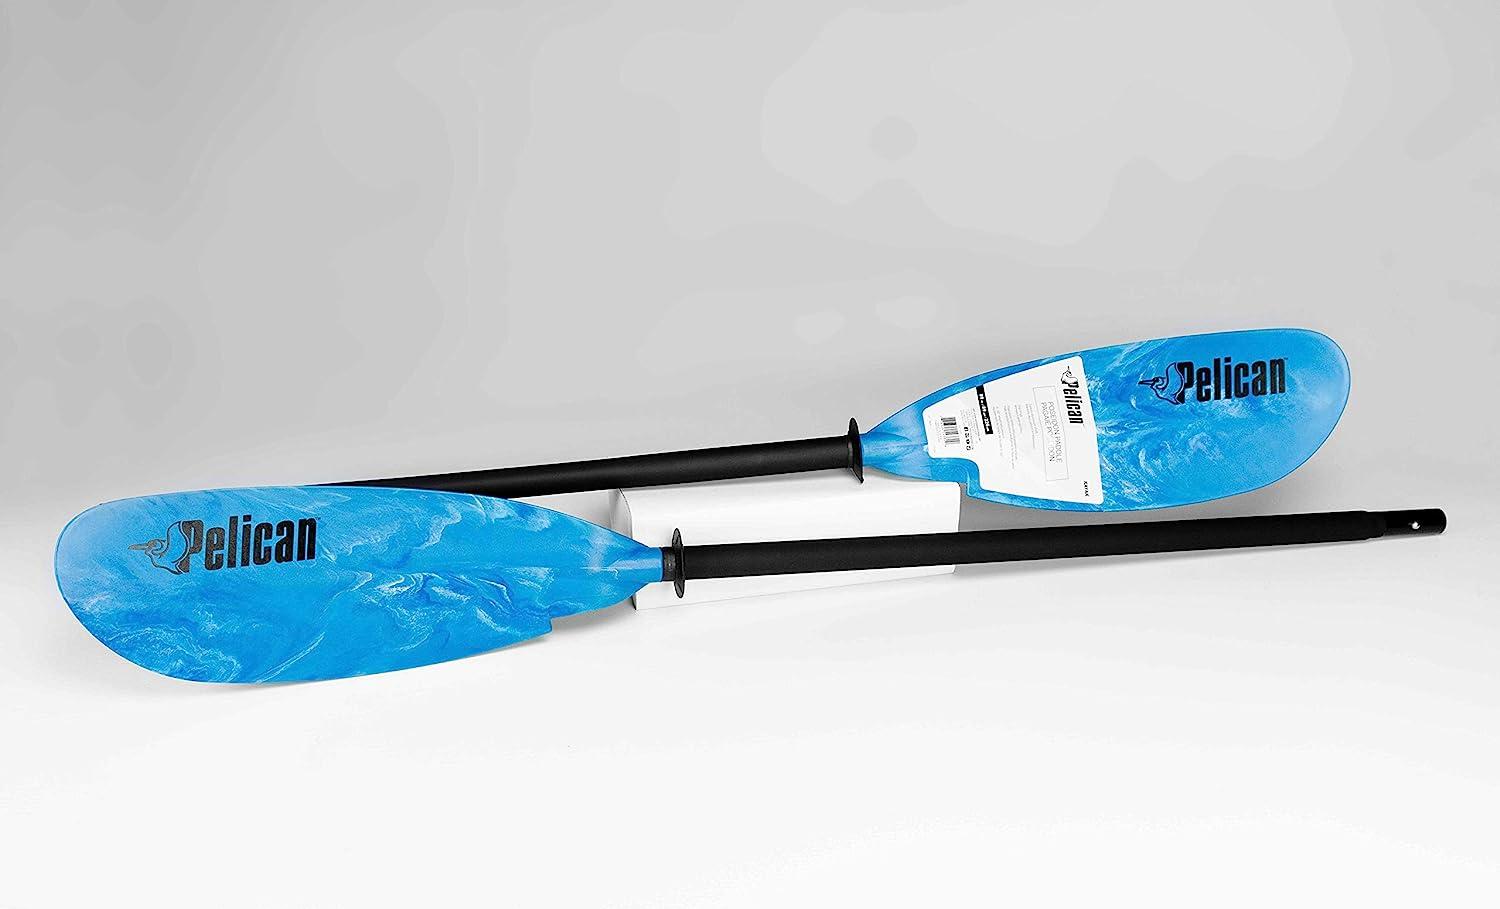 Poseidon Paddle 89 in - Aluminum Shaft with Reinforced Fiberglass Blades -  Lightweight, Adjustable Kayaks Paddles Blue 2020 Model